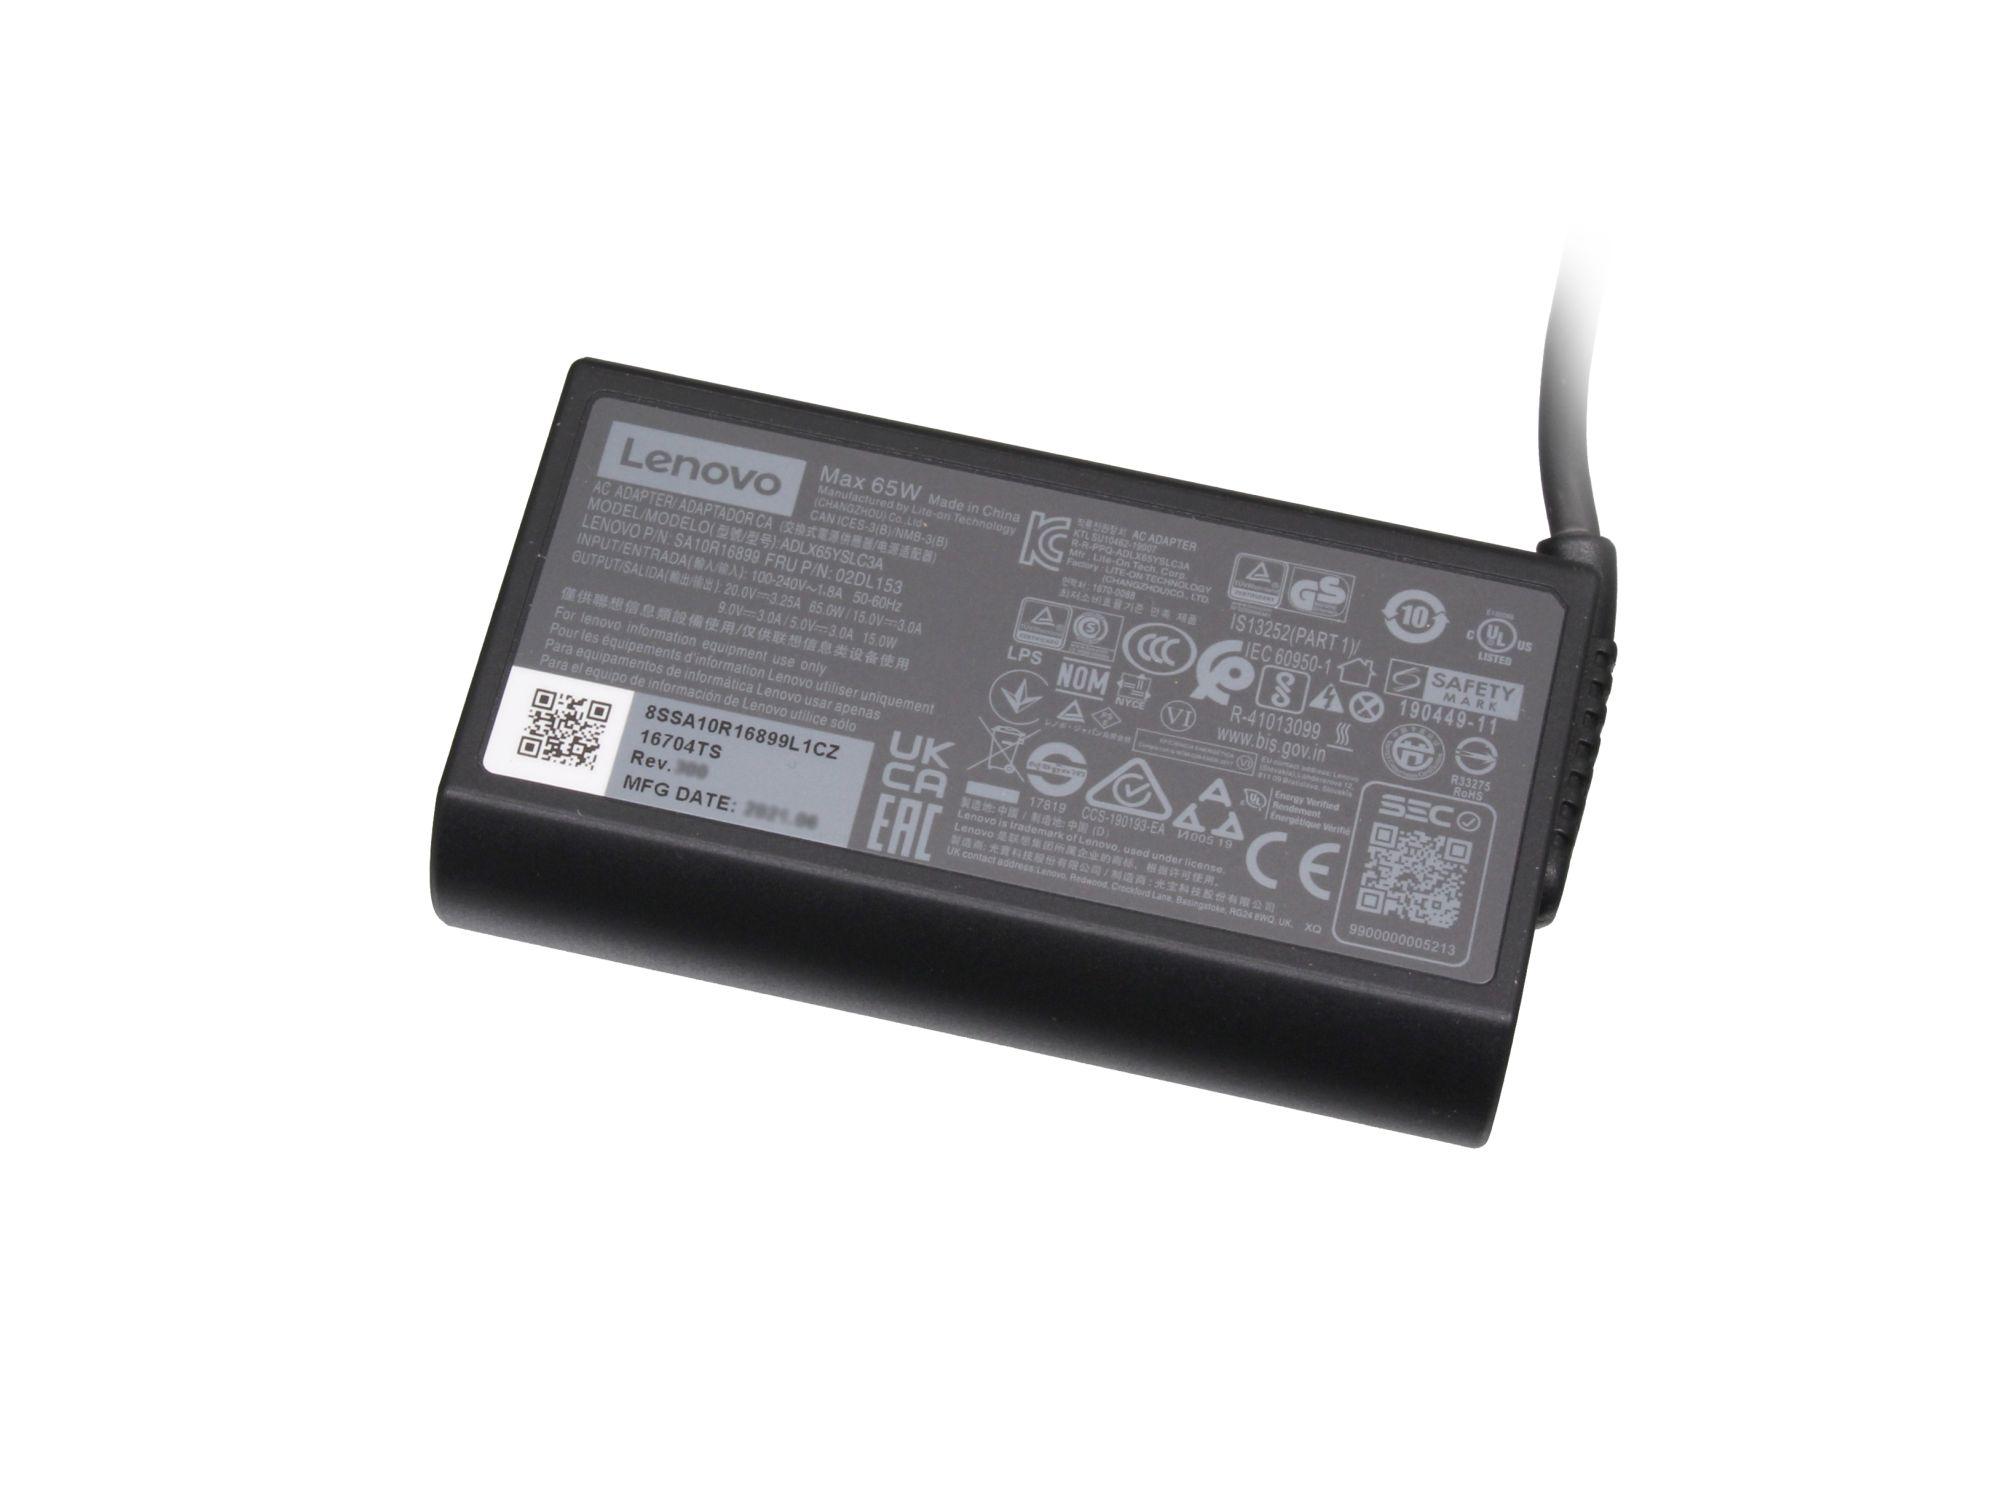 ThinkPad 65W Slim AC Adapter (USB Type-C)